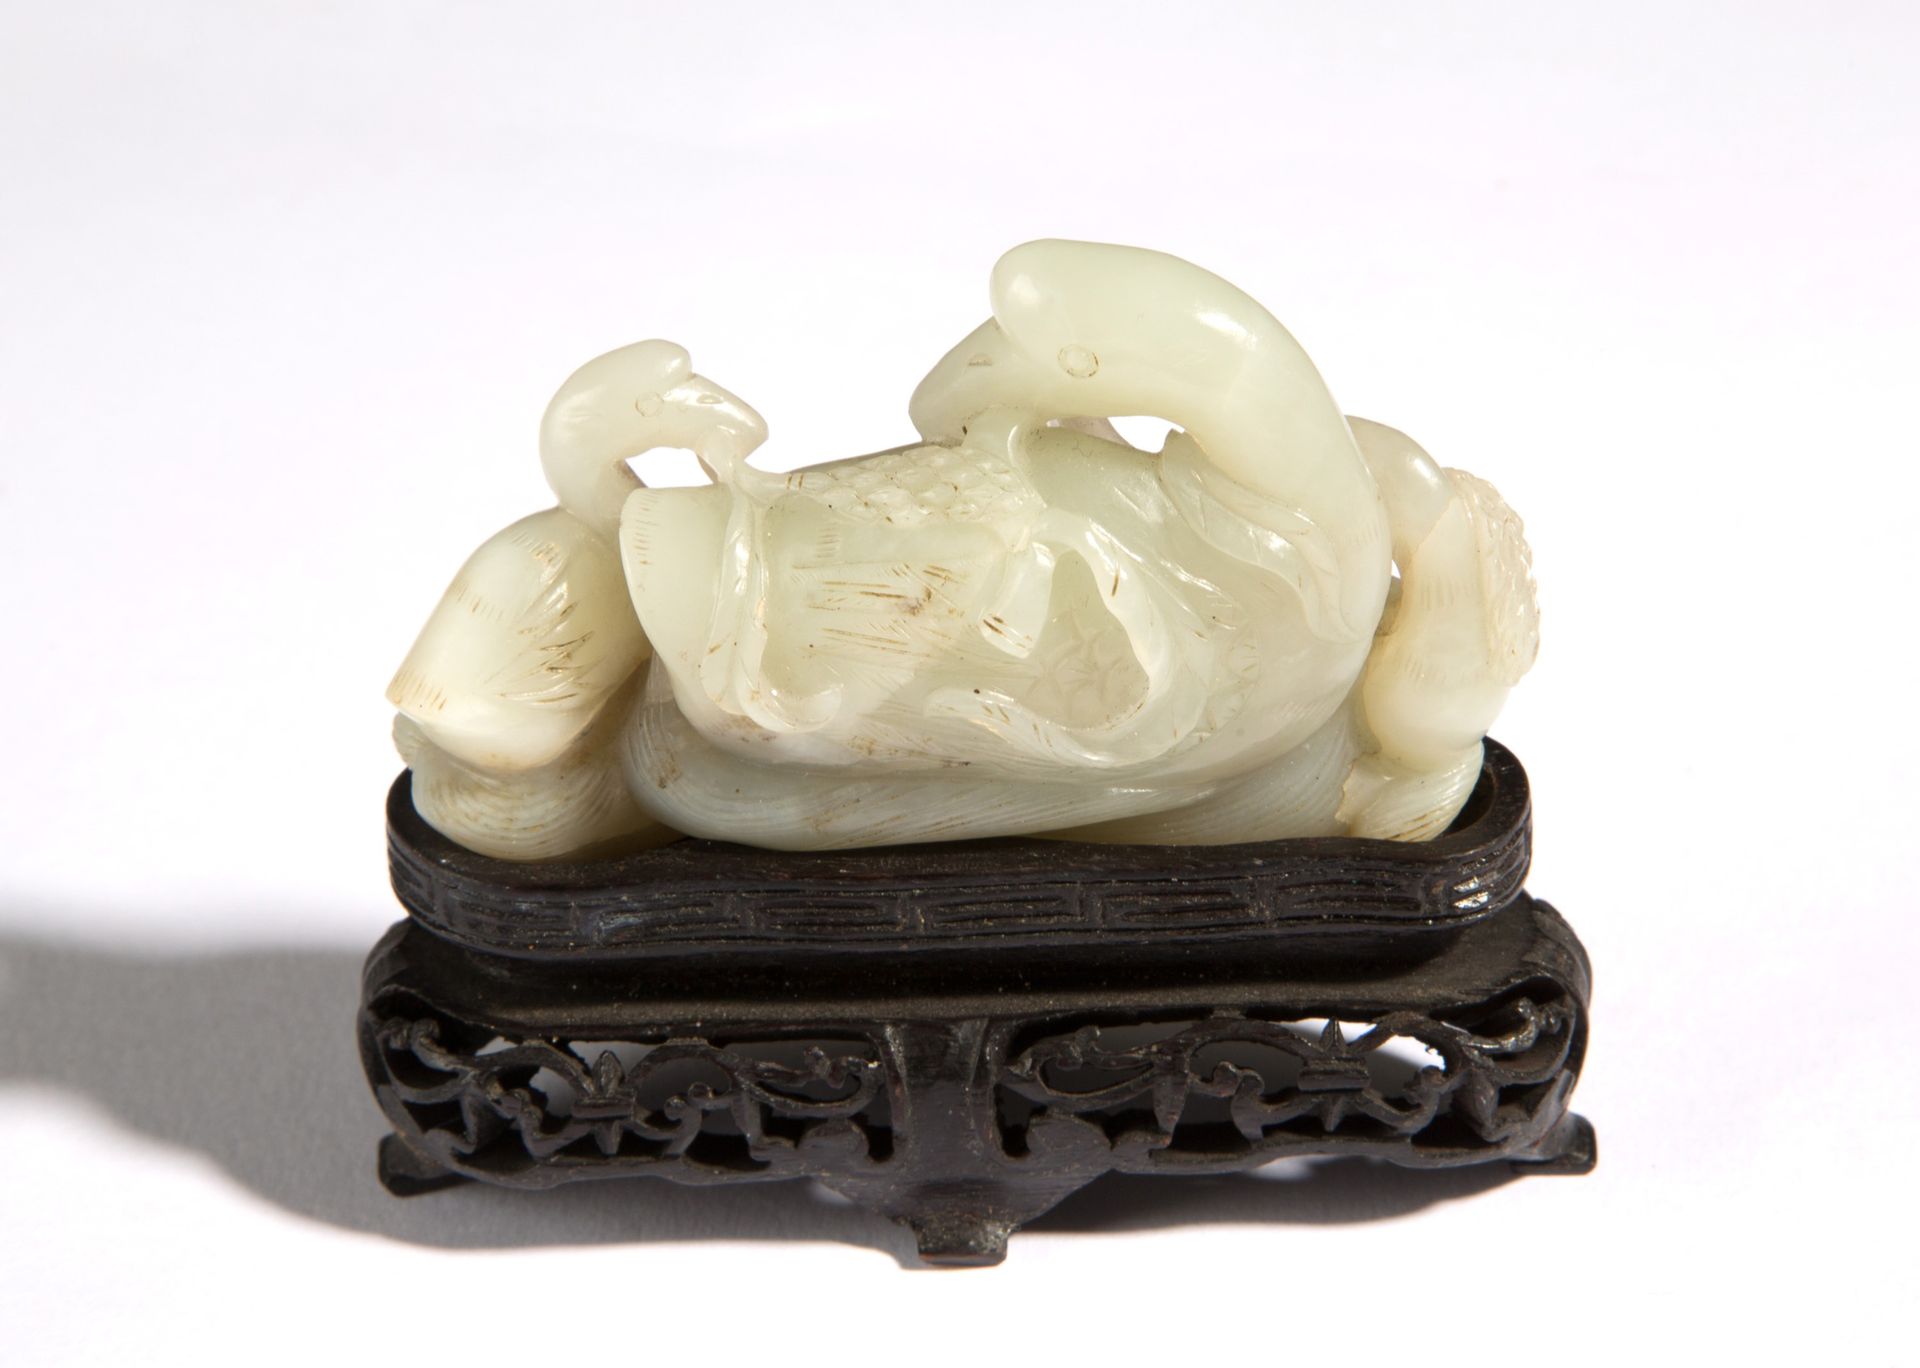 Jade swans 白玉雕塑描绘的是 "天鹅家族"。木质底座。中国。13世纪。4.5x9 cm 约。